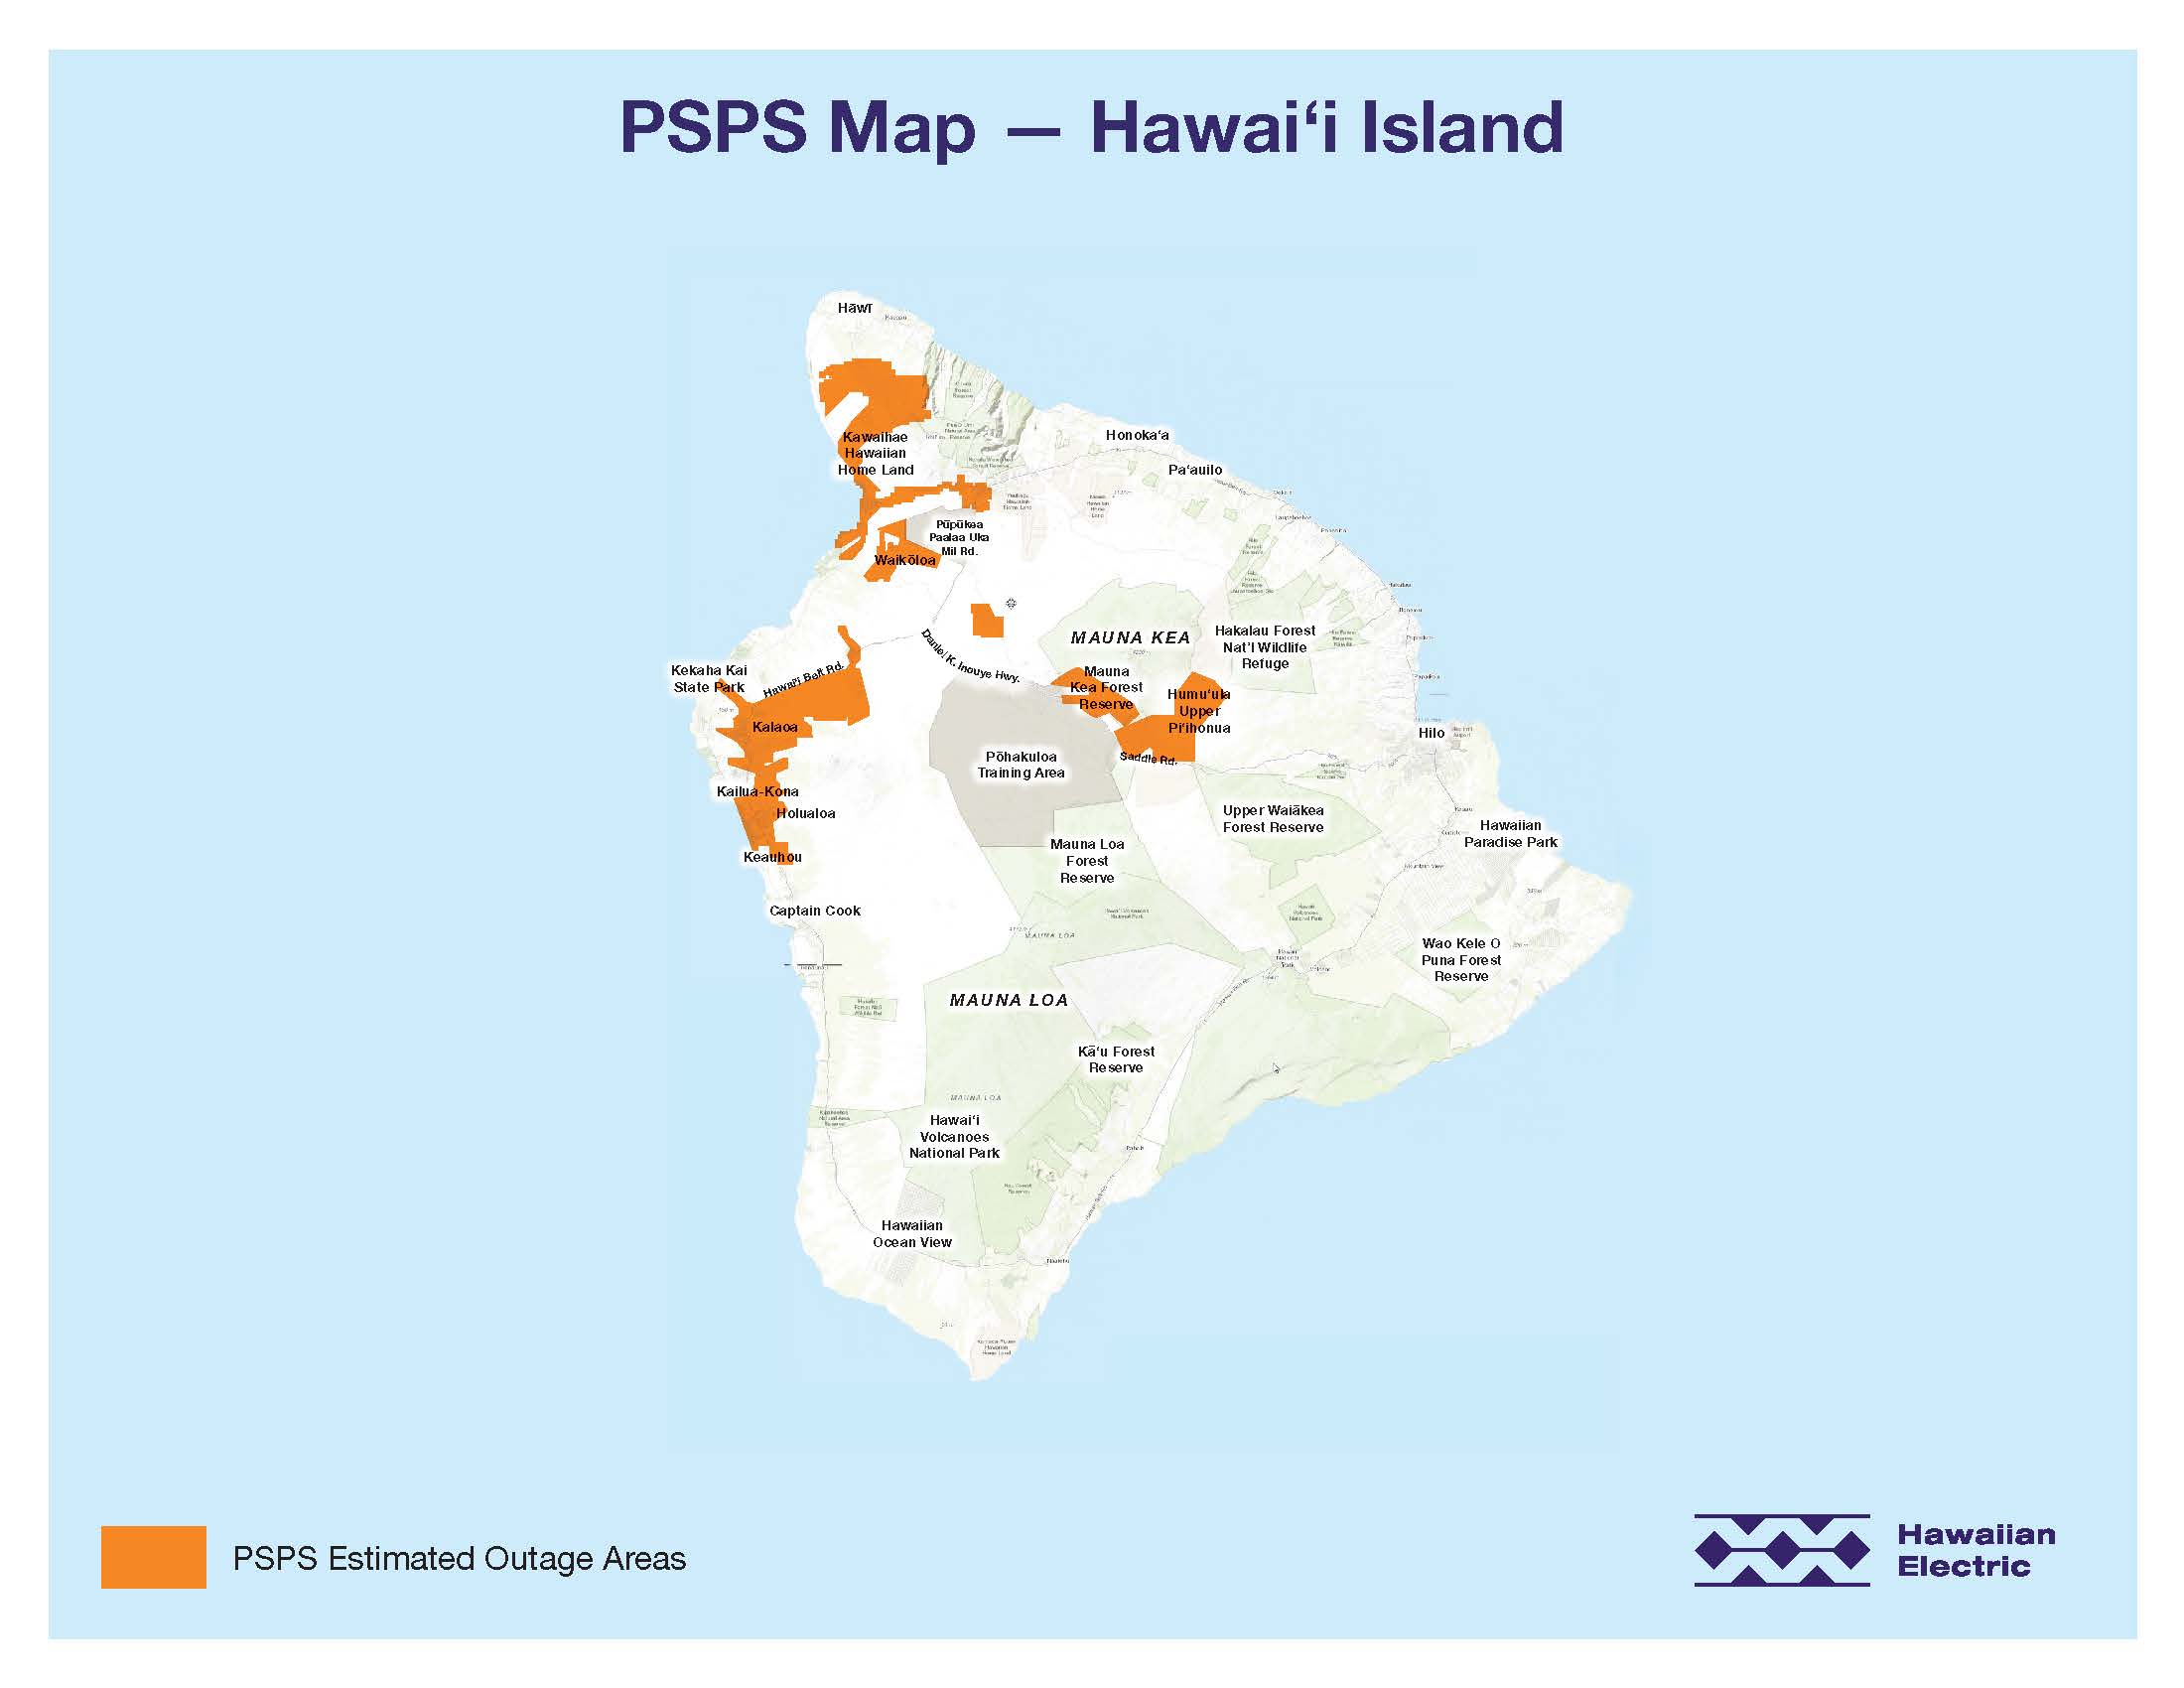 PSPS Map of Hawaii